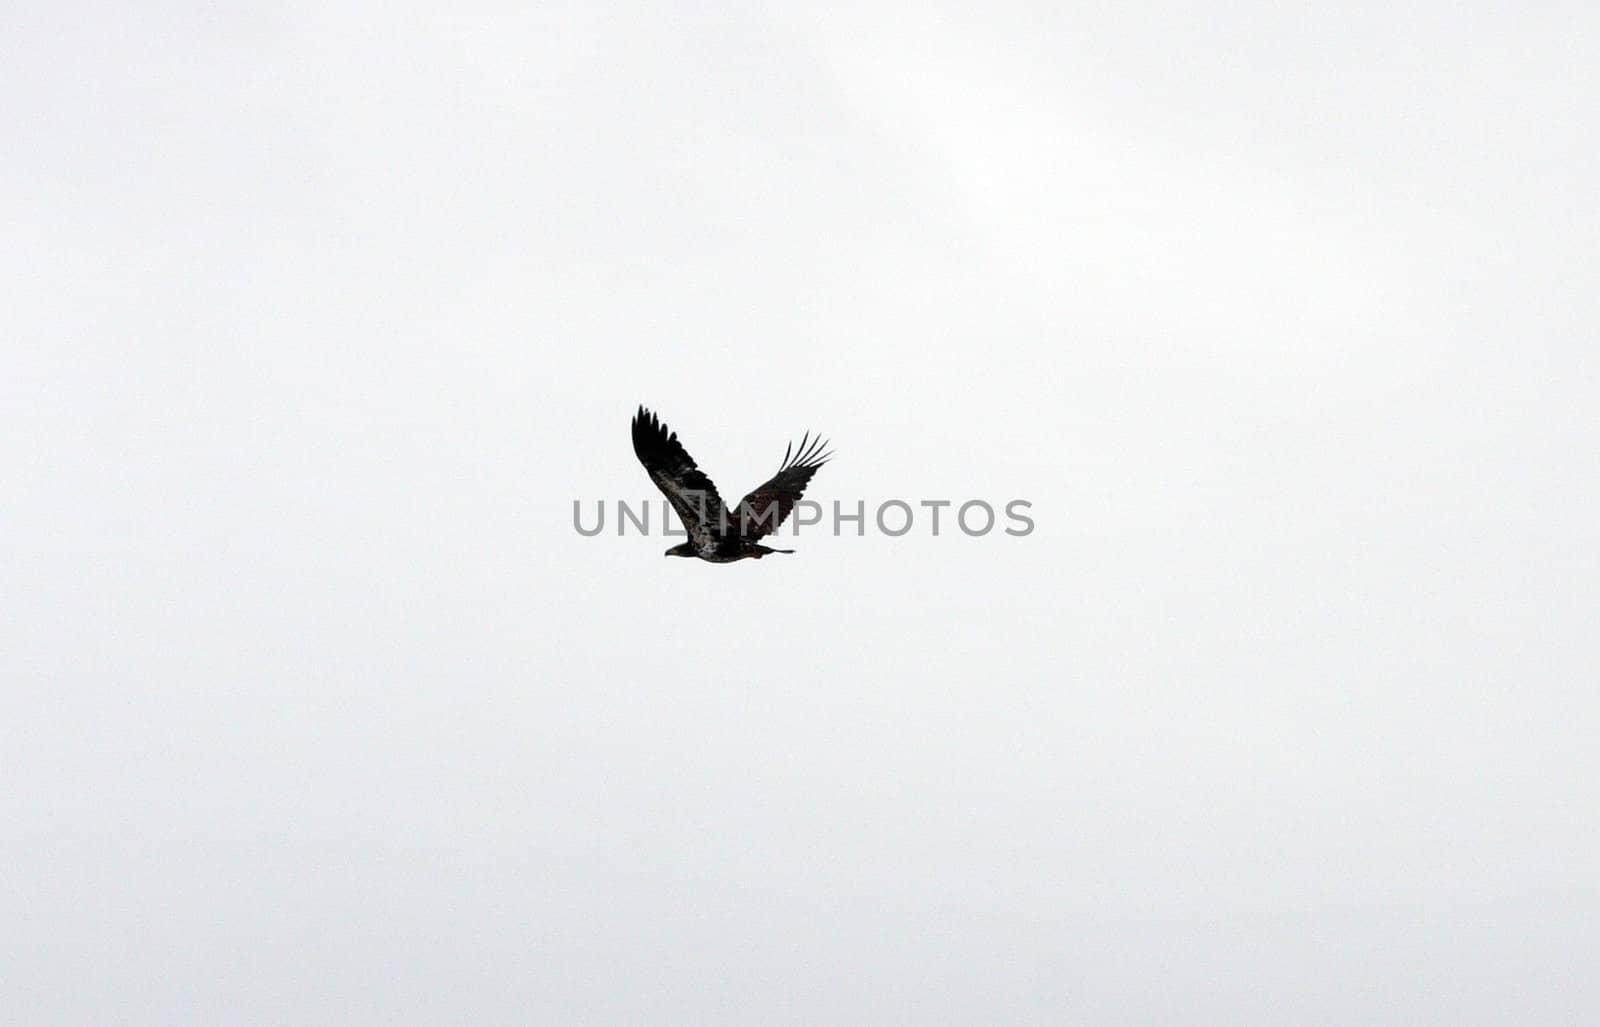 Bald Eagle.  Photo taken at Lower Klamath National Wildlife Refuge, CA.